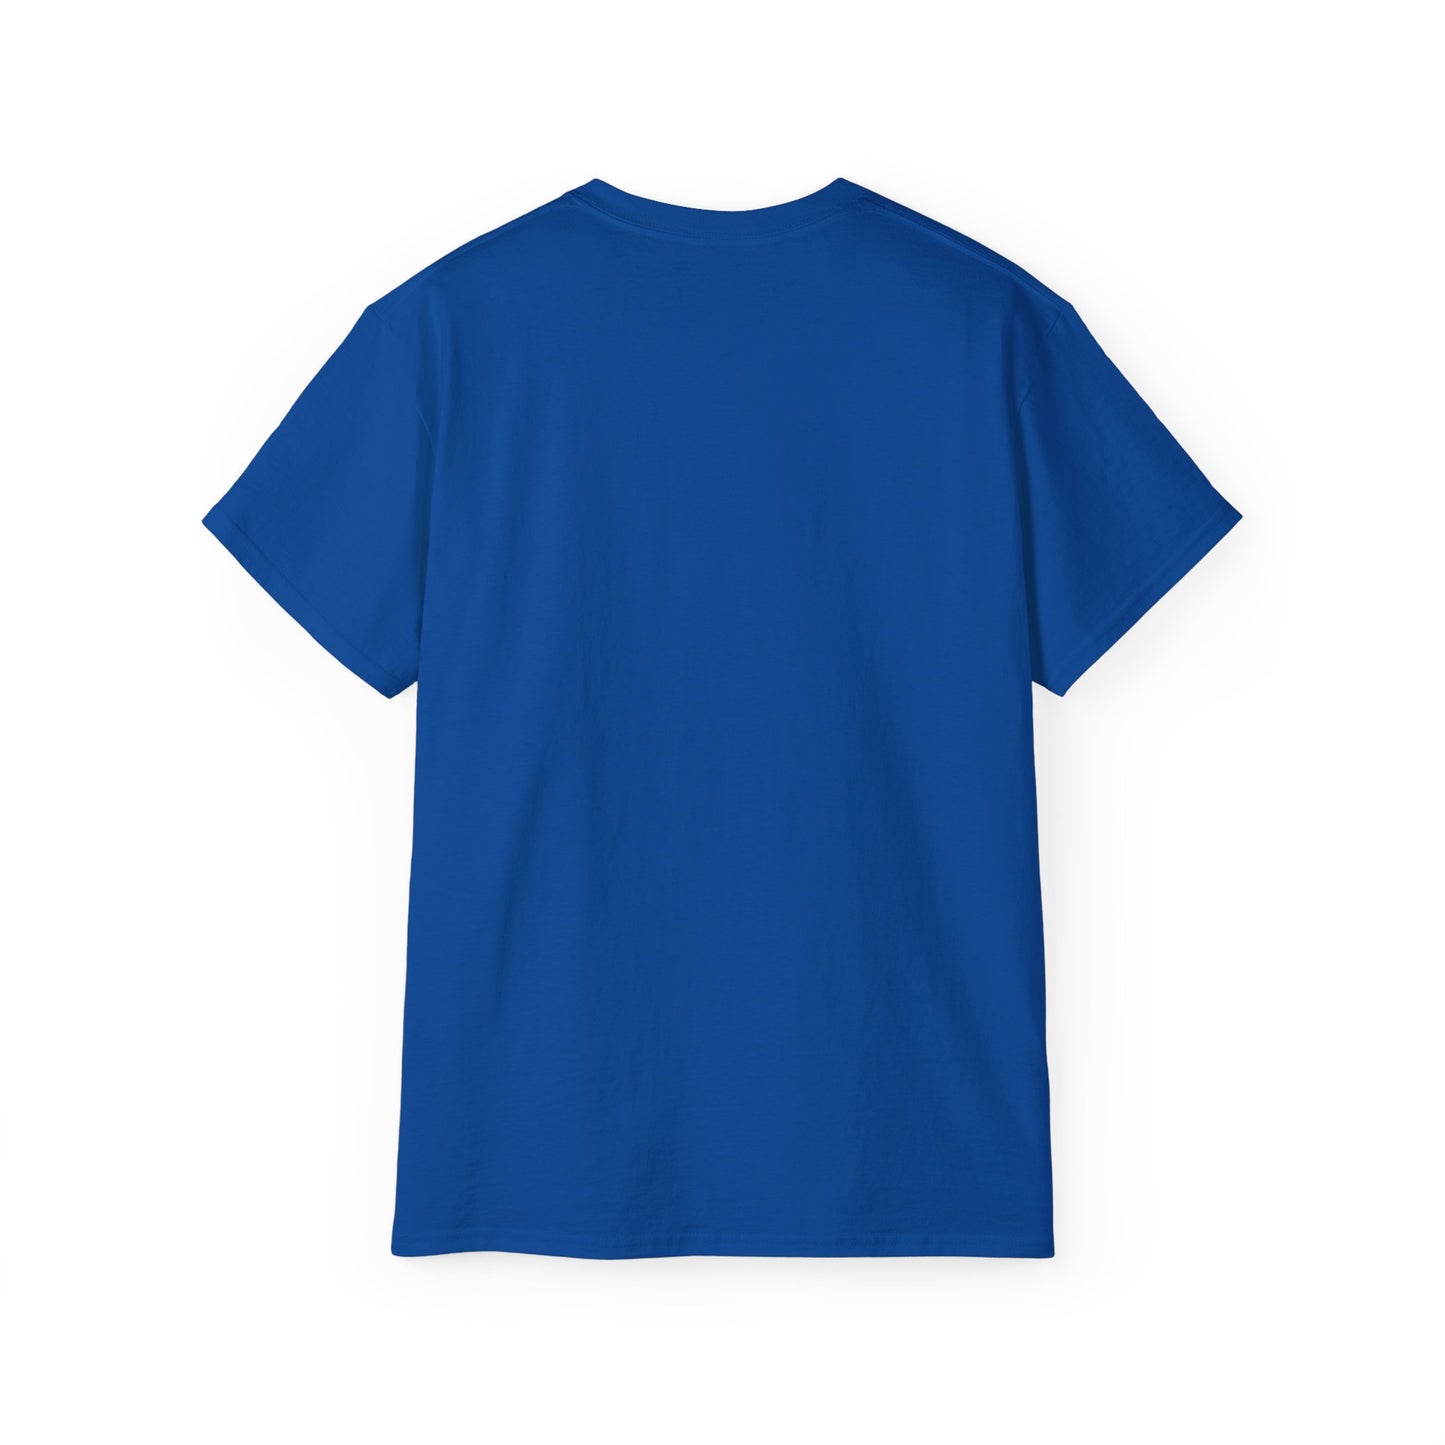 Unisex Ultra Cotton design (Hardcore) T-shirt